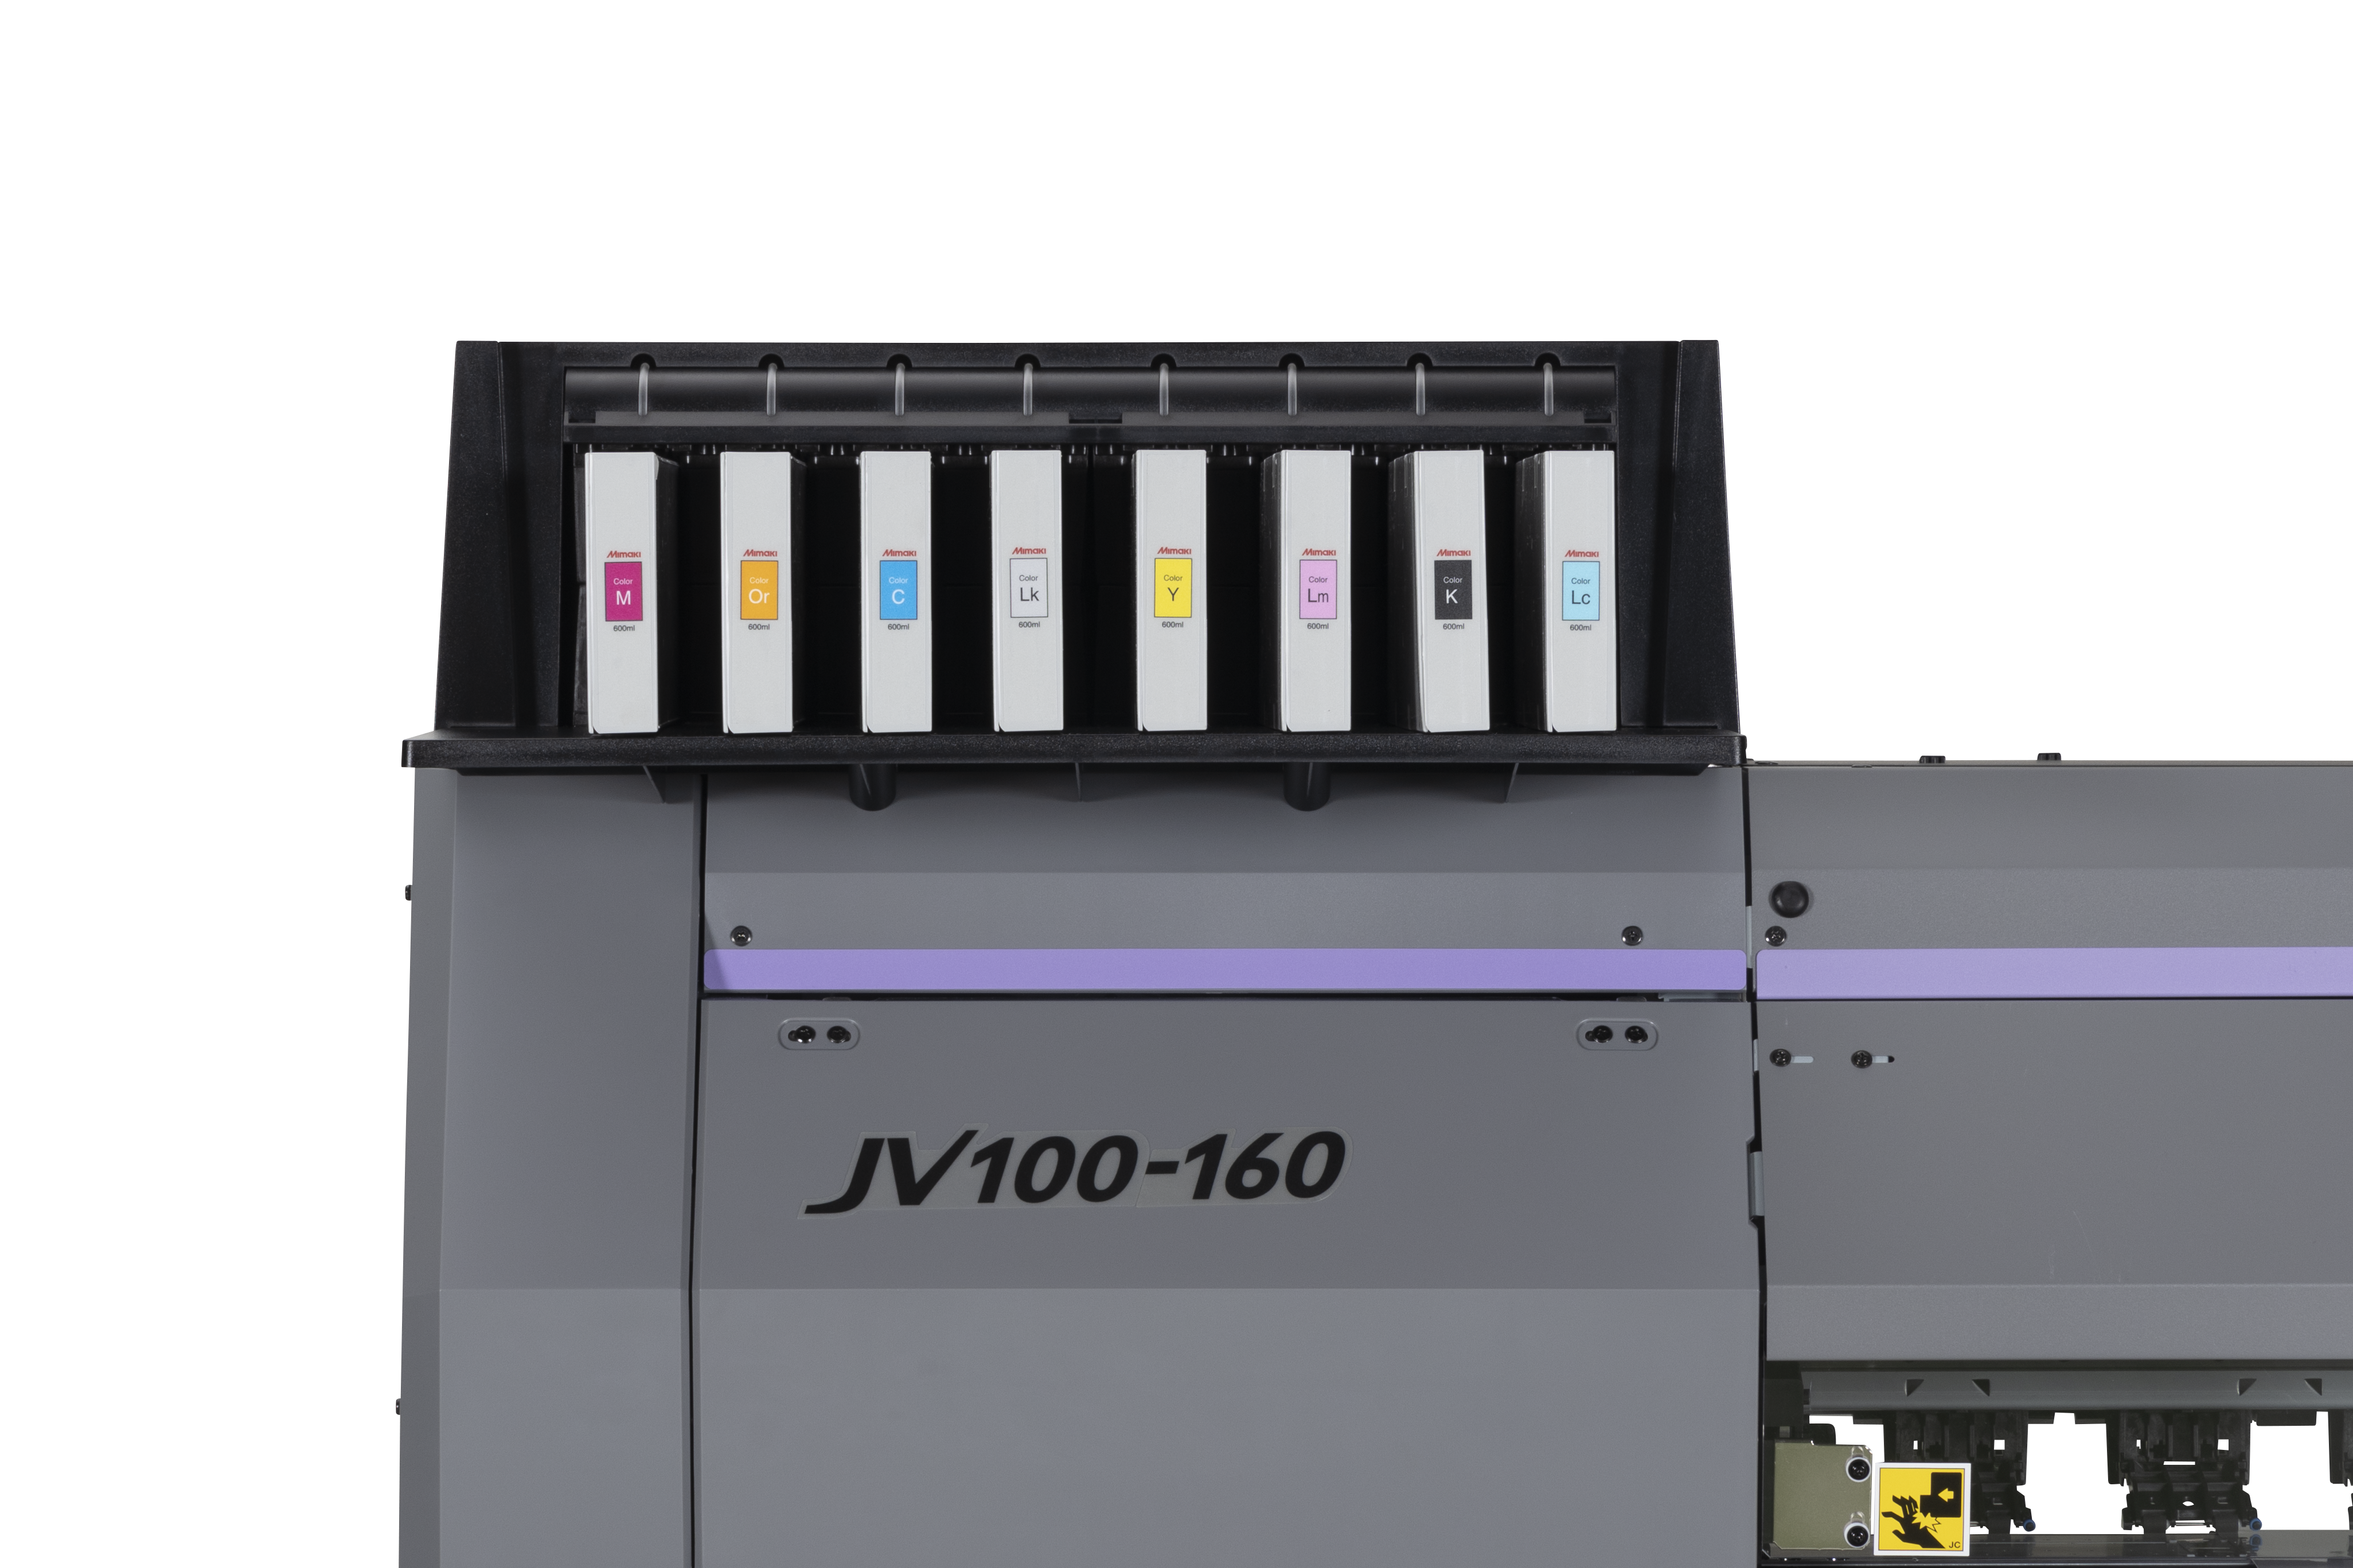 mimaki jv100-160 ink cartridge product view